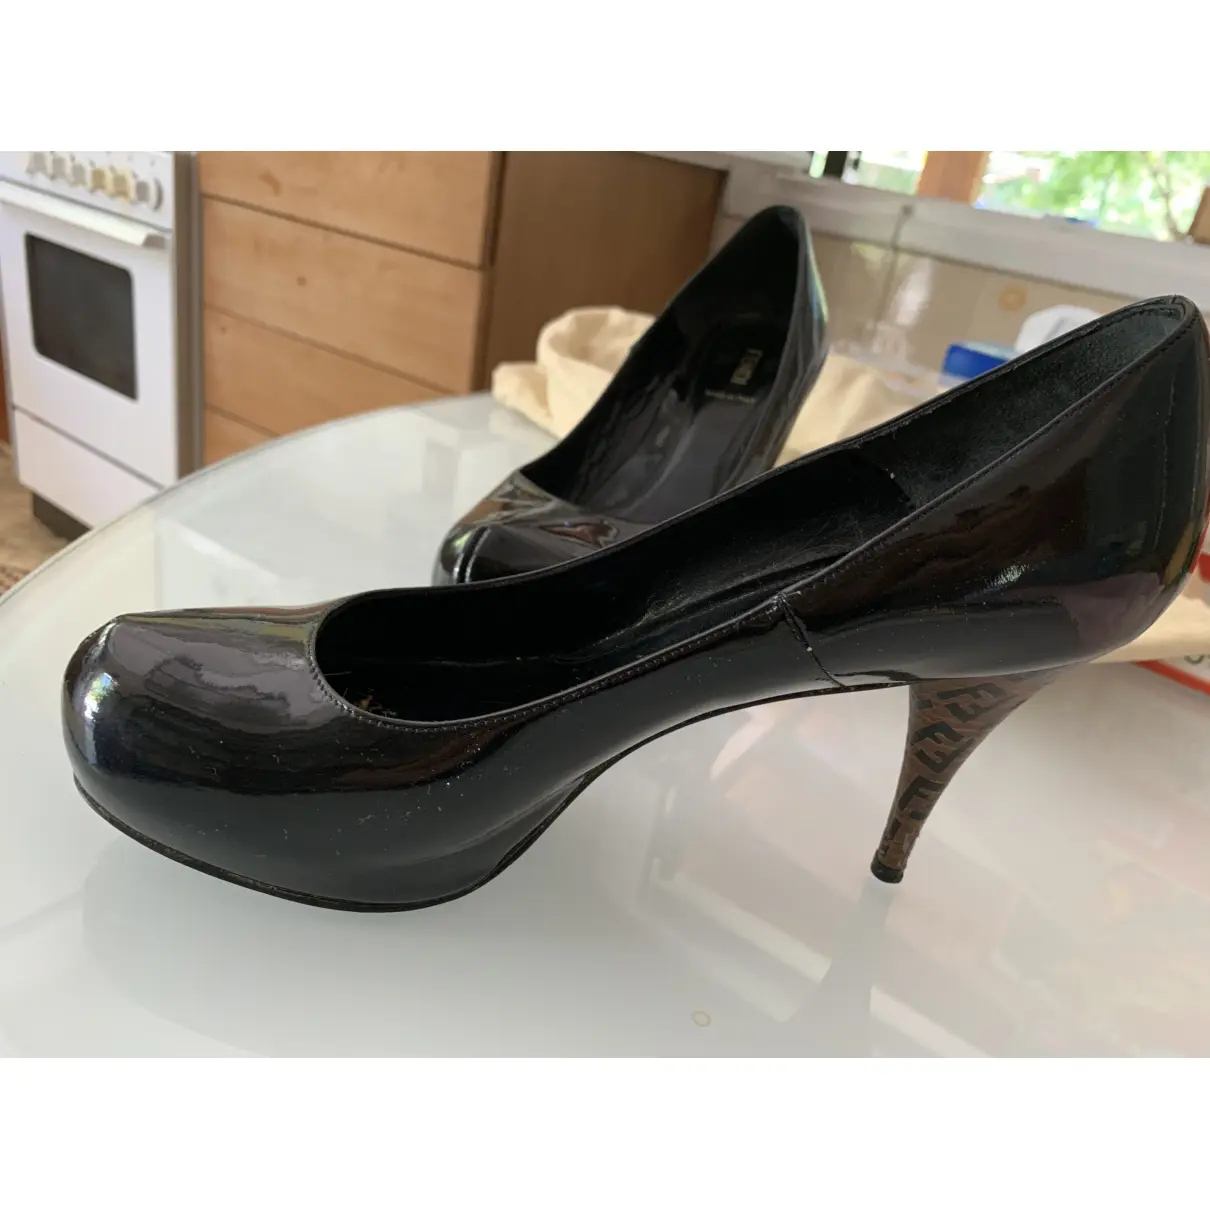 Patent leather heels Fendi